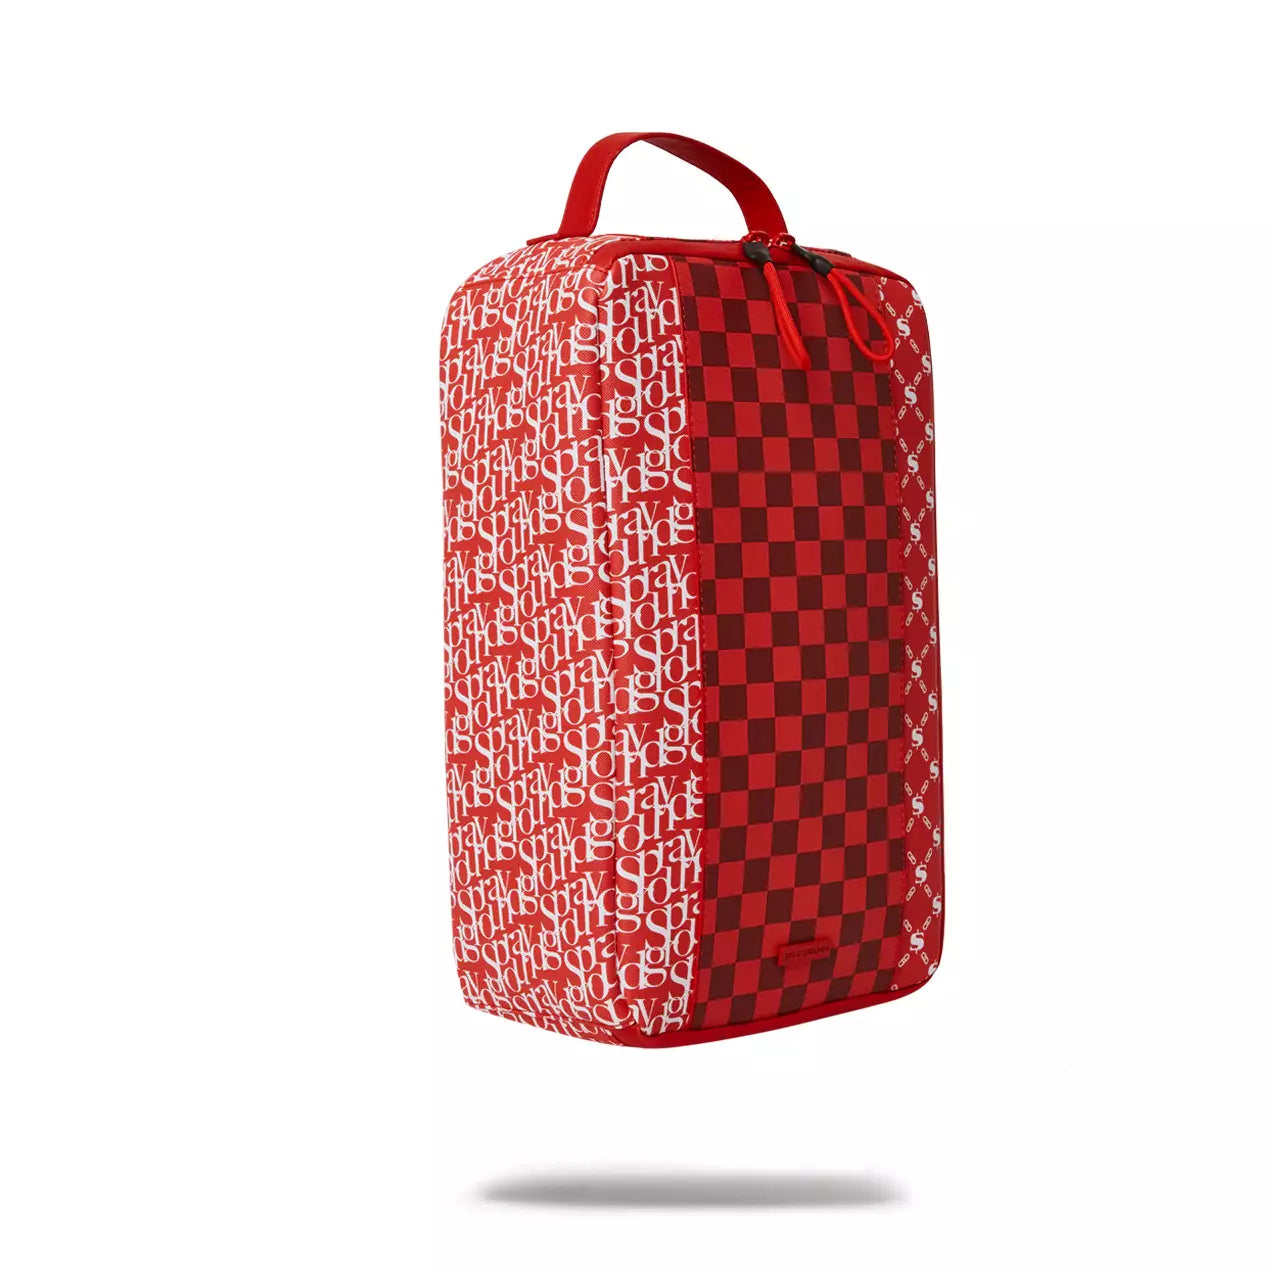 Red Sprayground Duffel bag